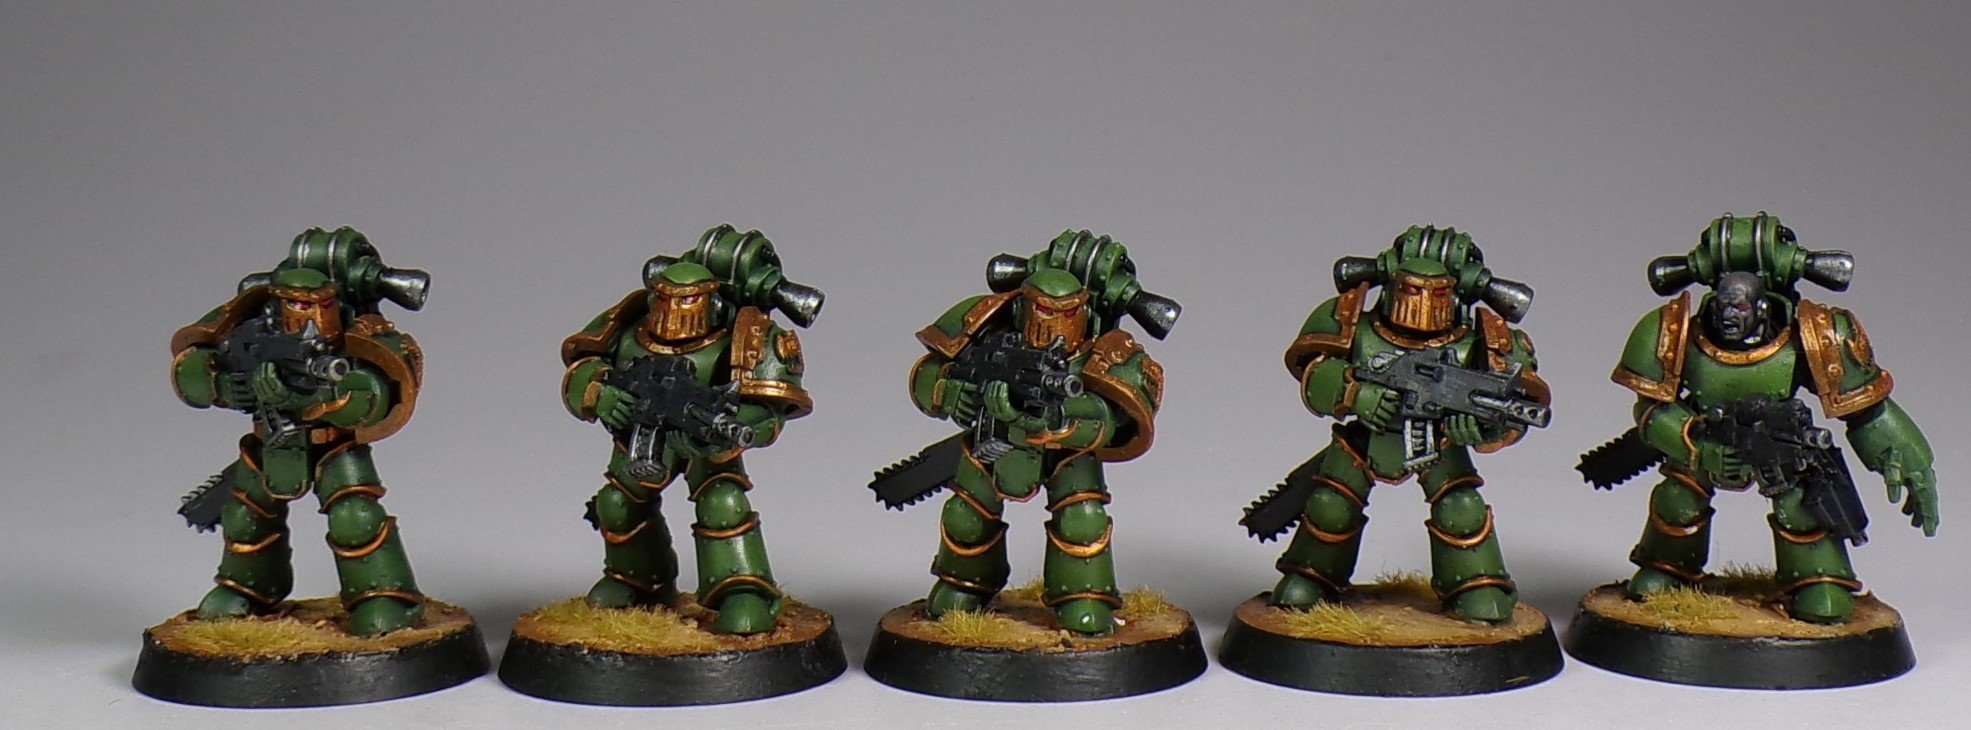 Paintedfigs Salamander Space Marines Miniature Painting Service (5).jpg